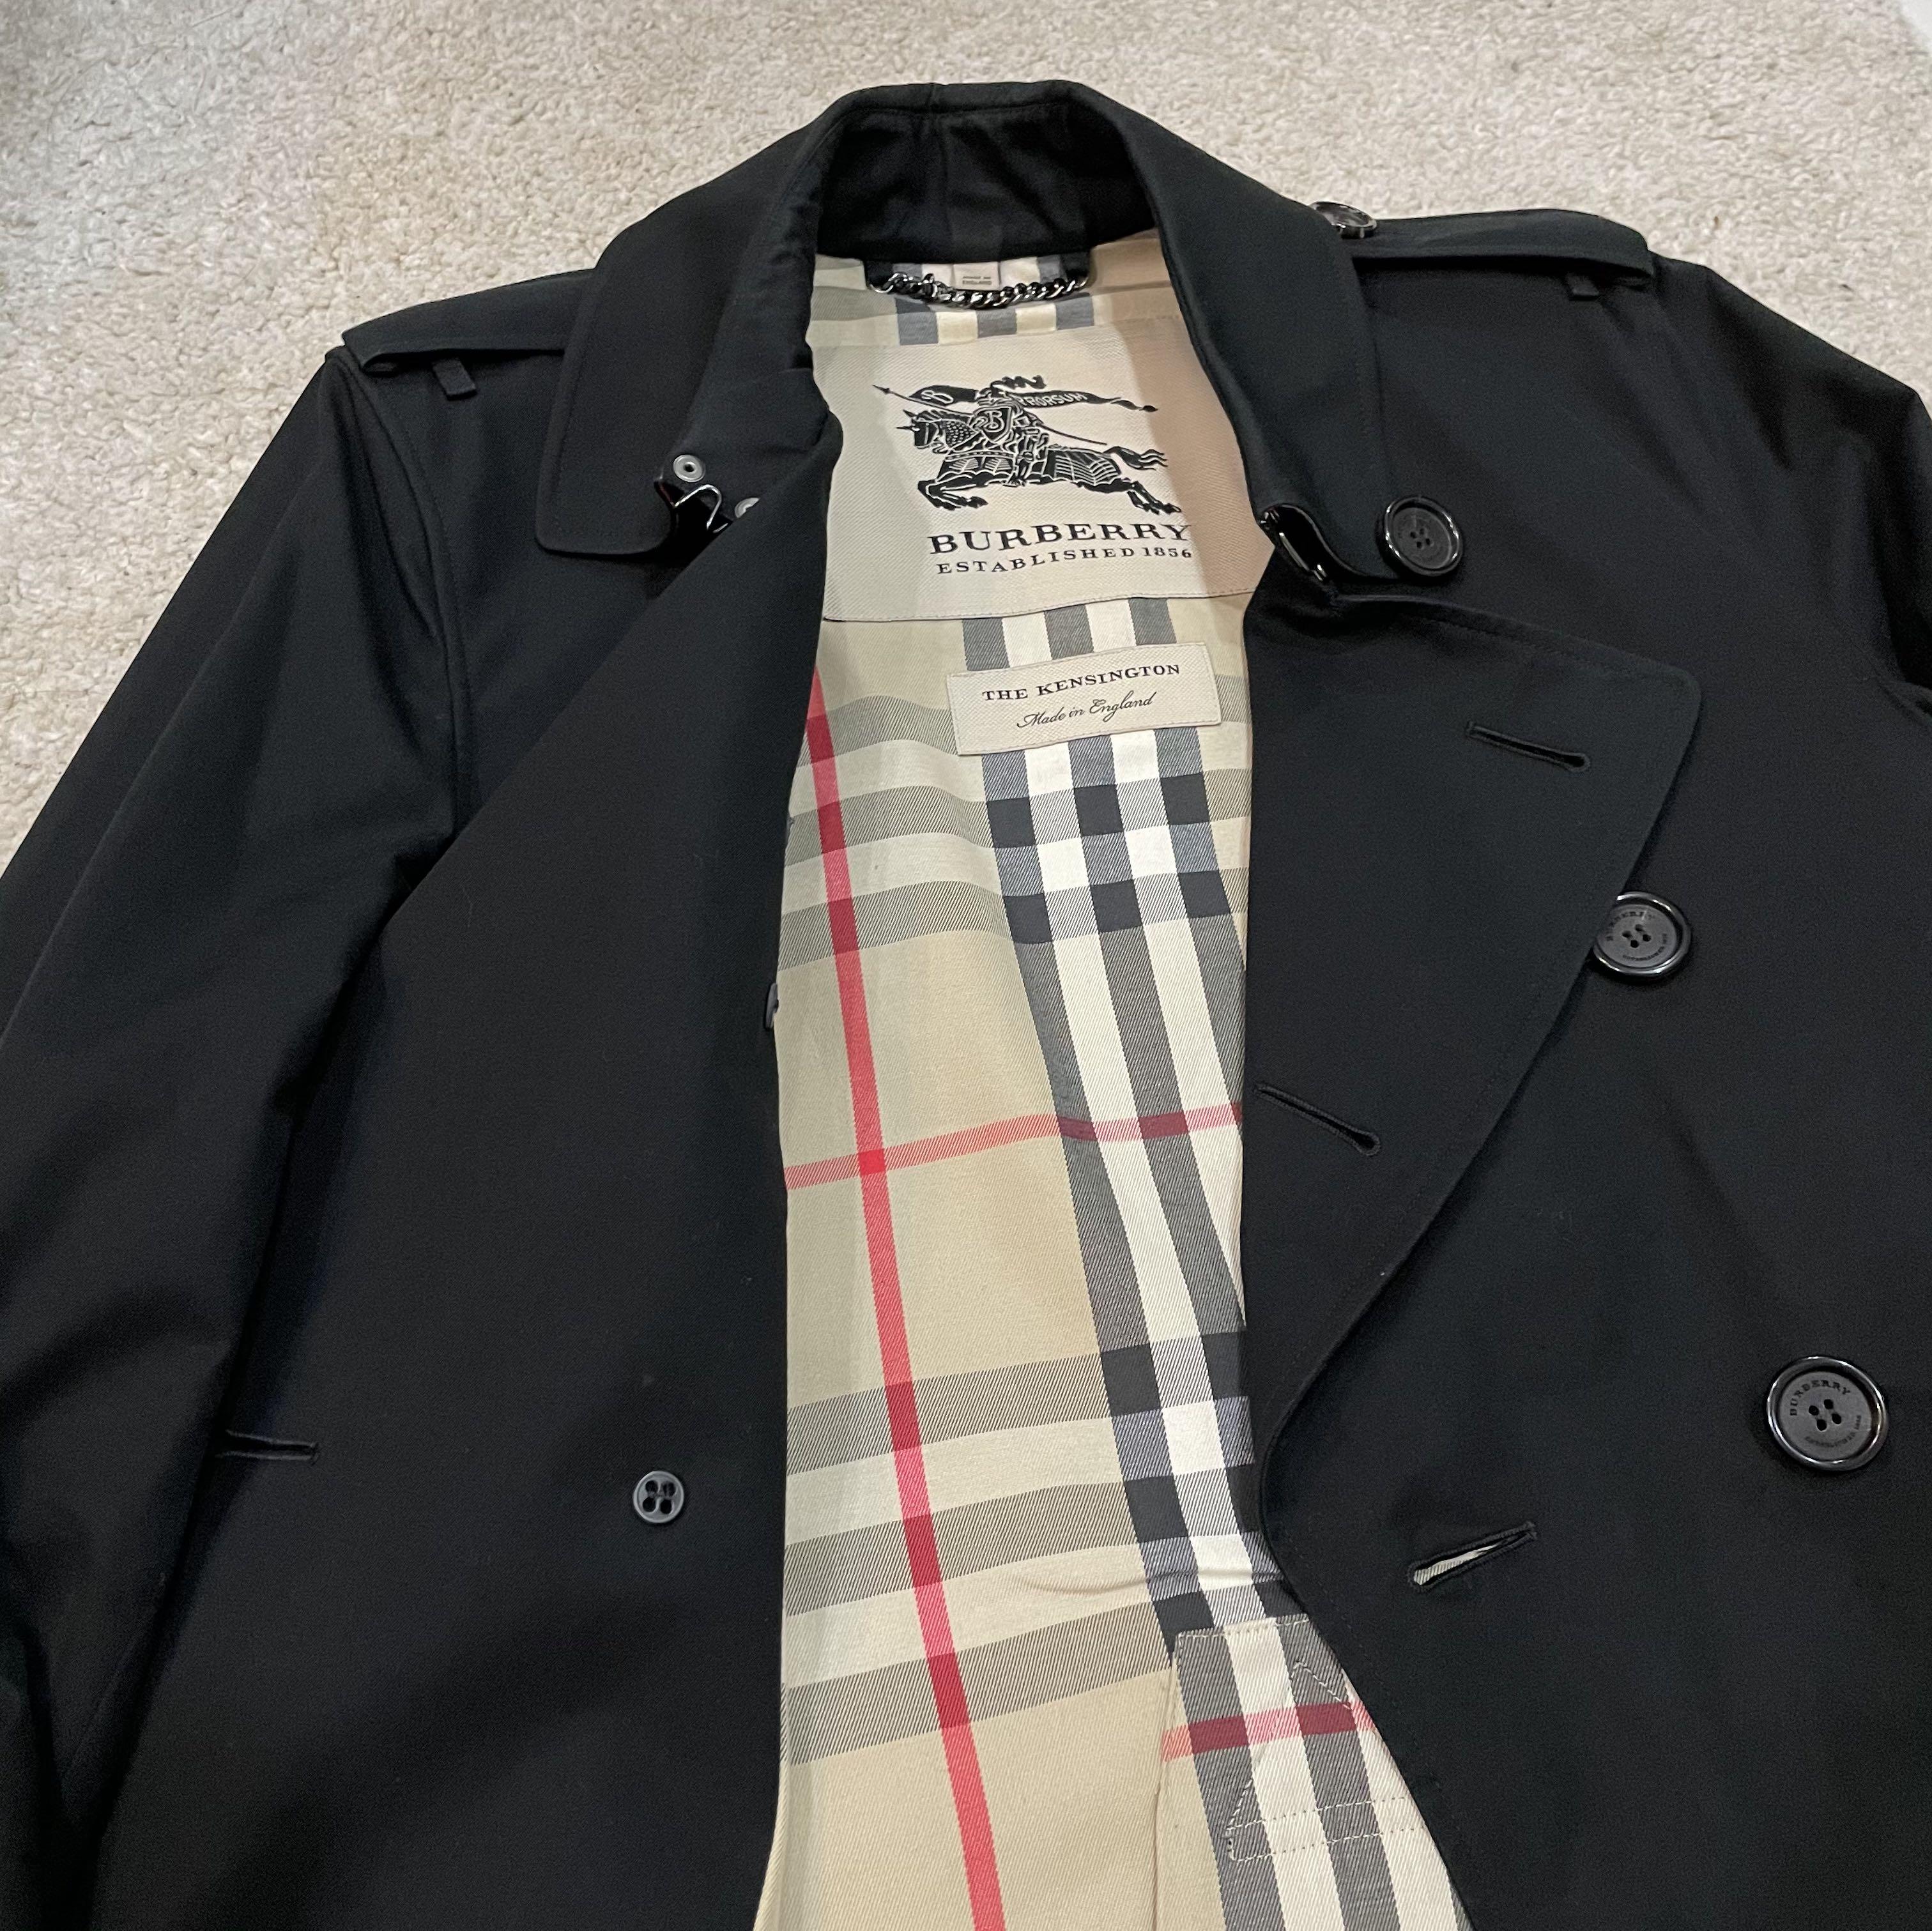 Trench Coat BURBERRY KENSINGTON MEDIUM 44 近全新, 名牌精品, 精品服飾在旋轉拍賣